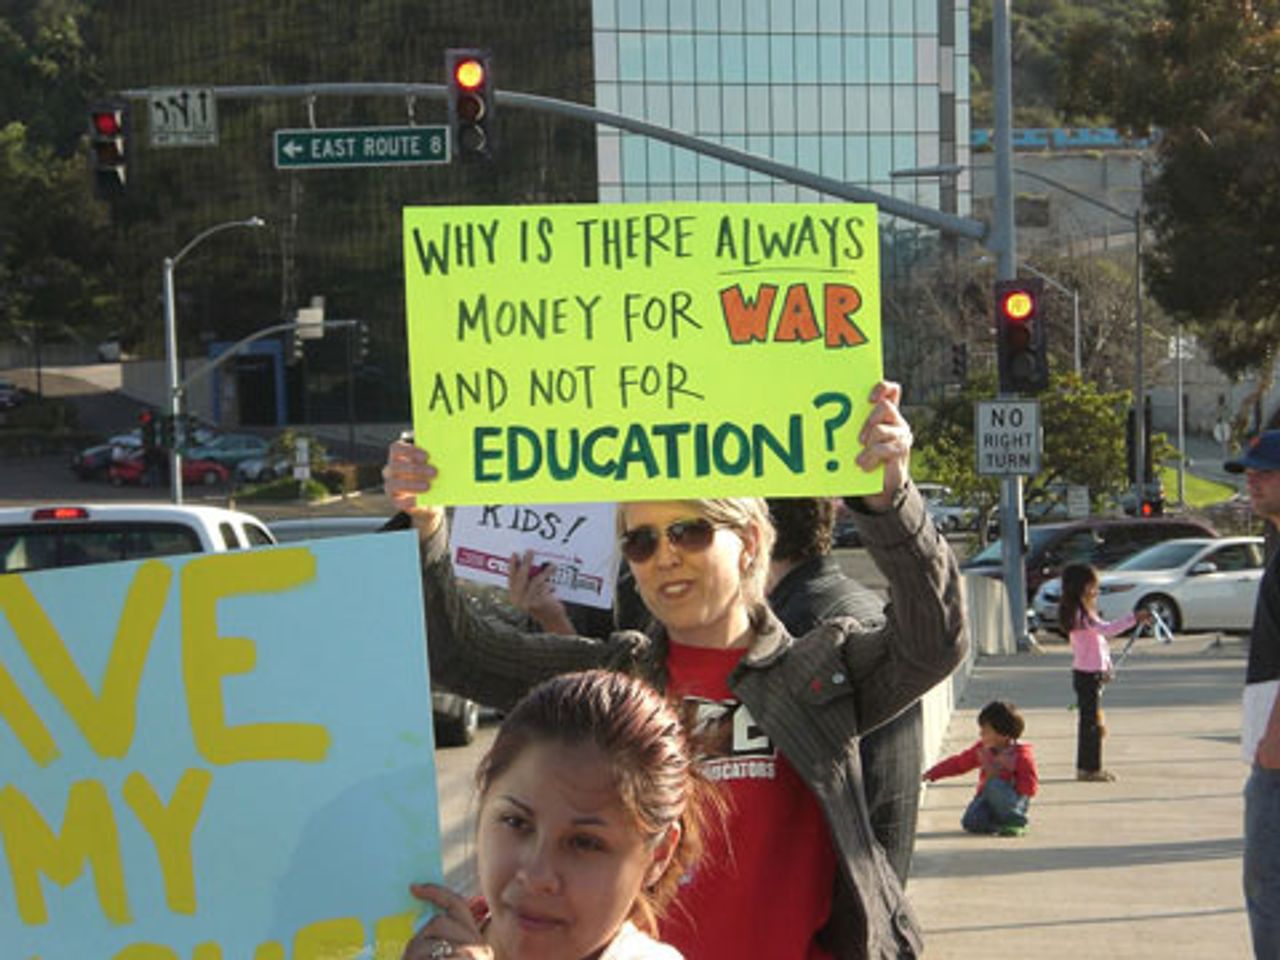 Education NOT War